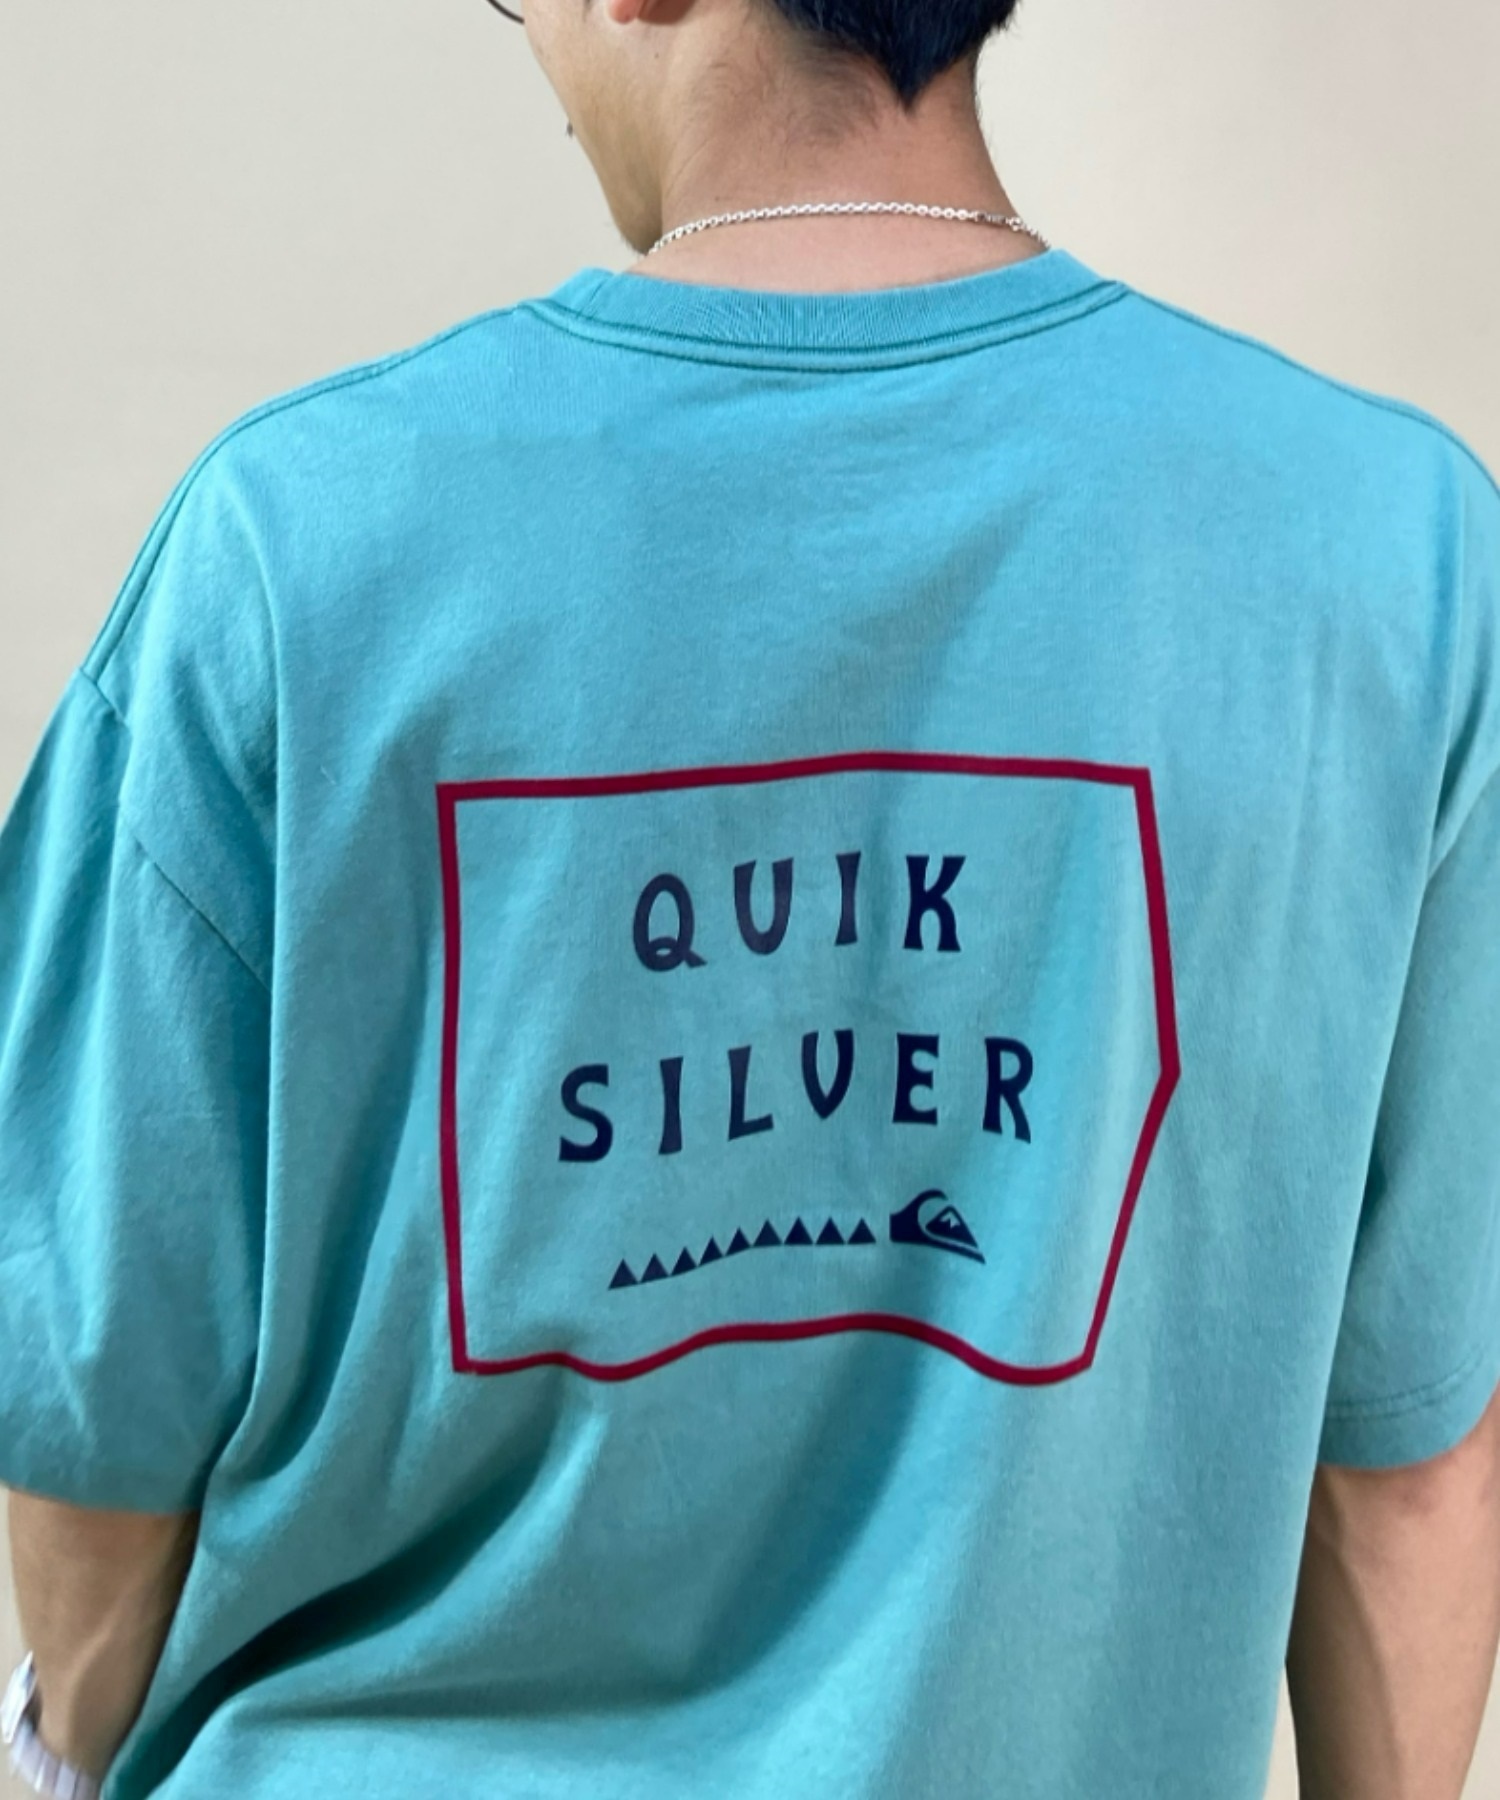 QUIKSILVER クイックシルバー QST222605M メンズ 半袖 Tシャツ オーバーサイズ スクエアロゴ ドロップショルダー ポケット ムラサキスポーツ限定(BLU-M)